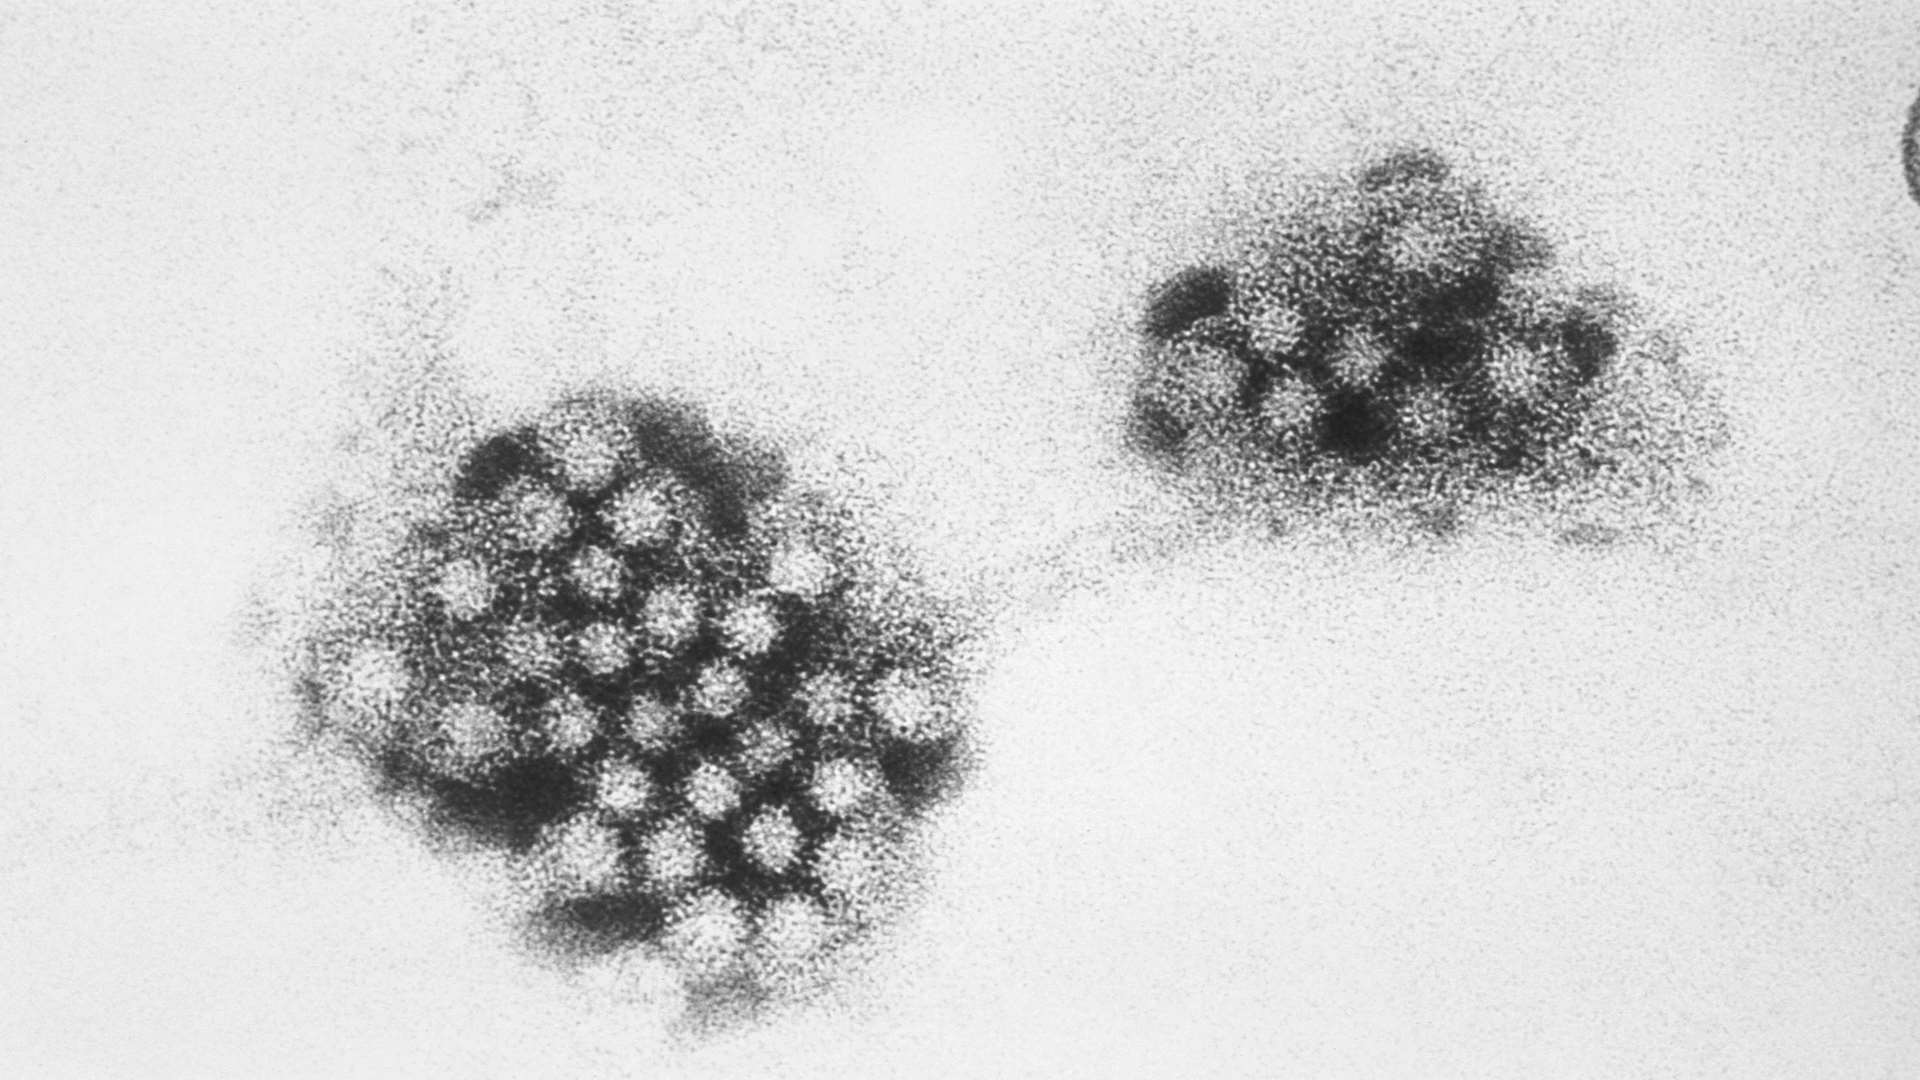 Transmission electron micrograph of Norovirus